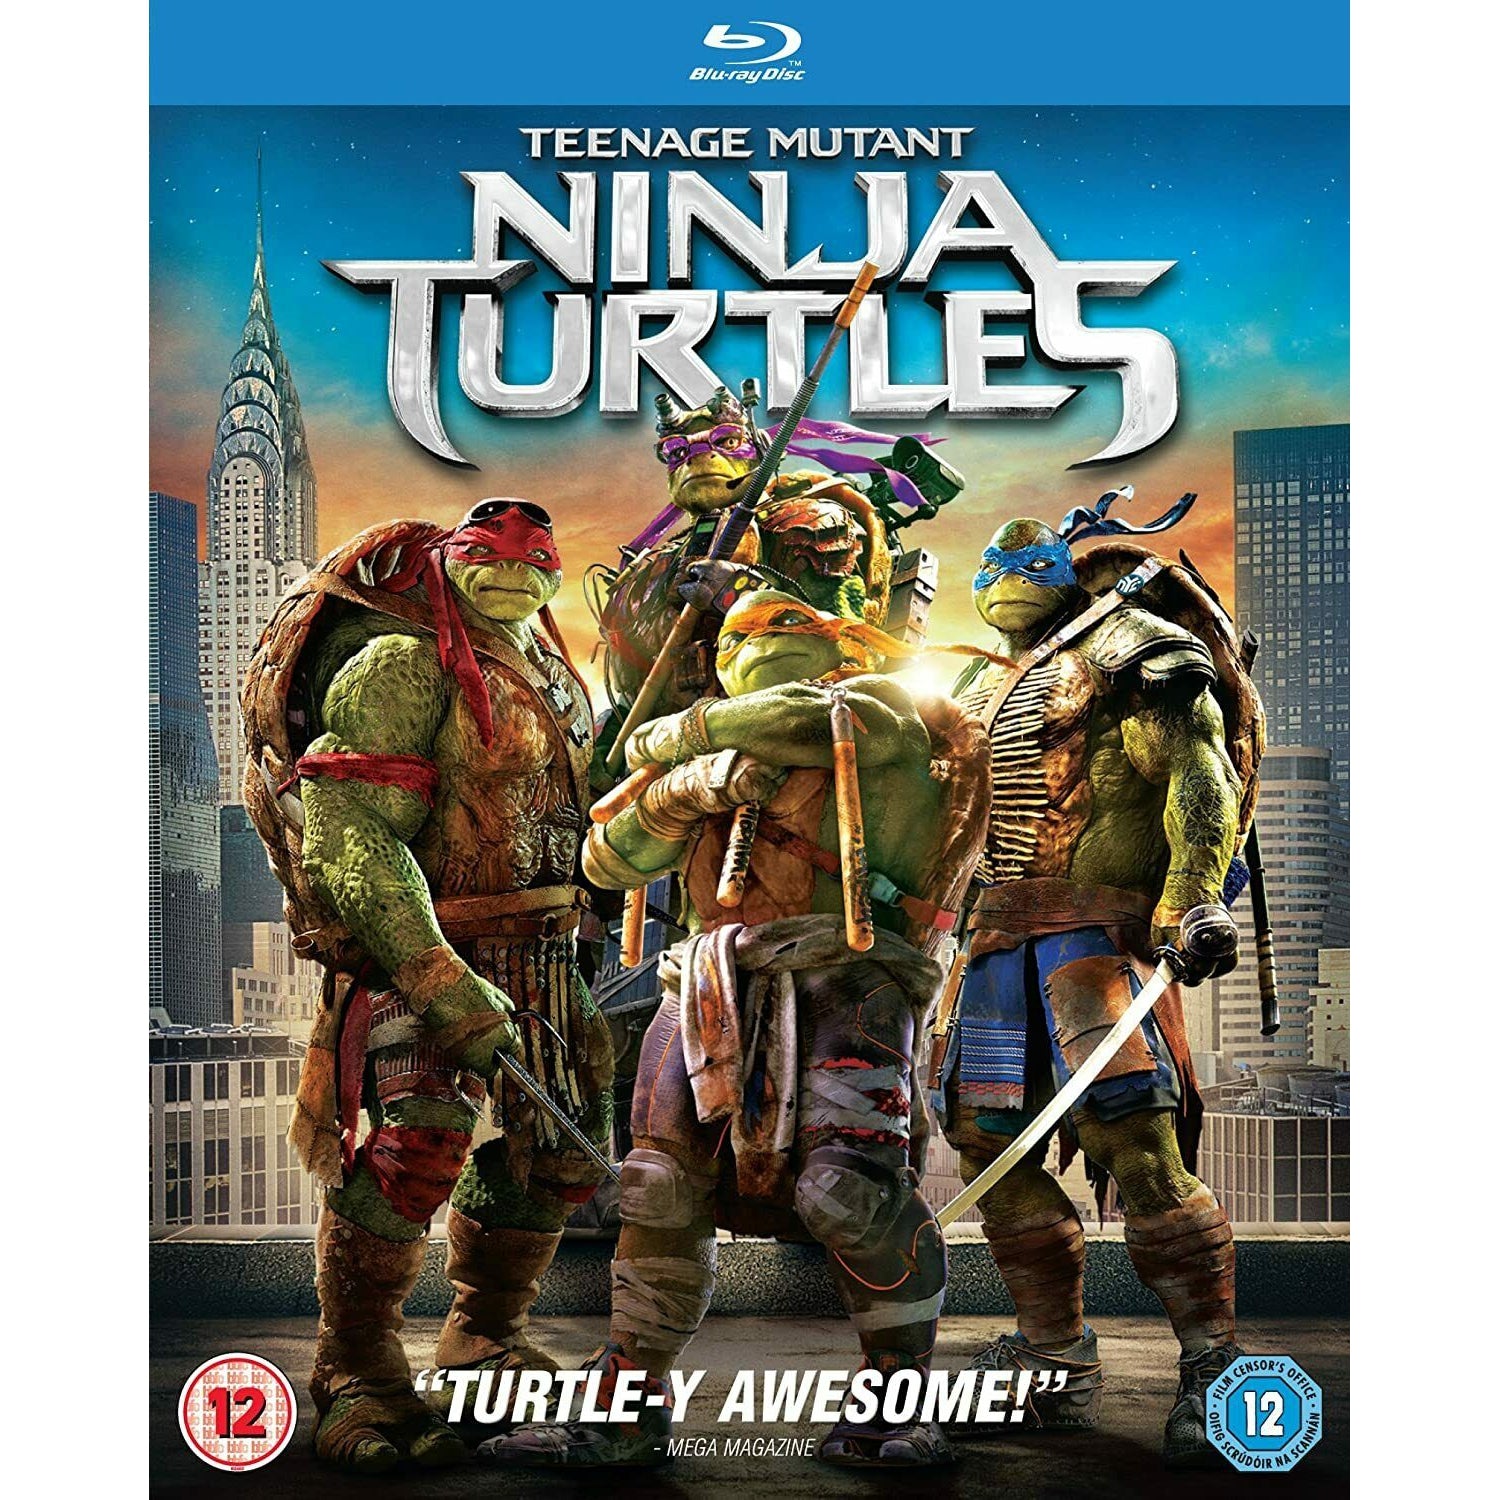 Teenage Mutant Ninja Turtles Blu-ray/DVD - Brand New - Fast and Free Delivery